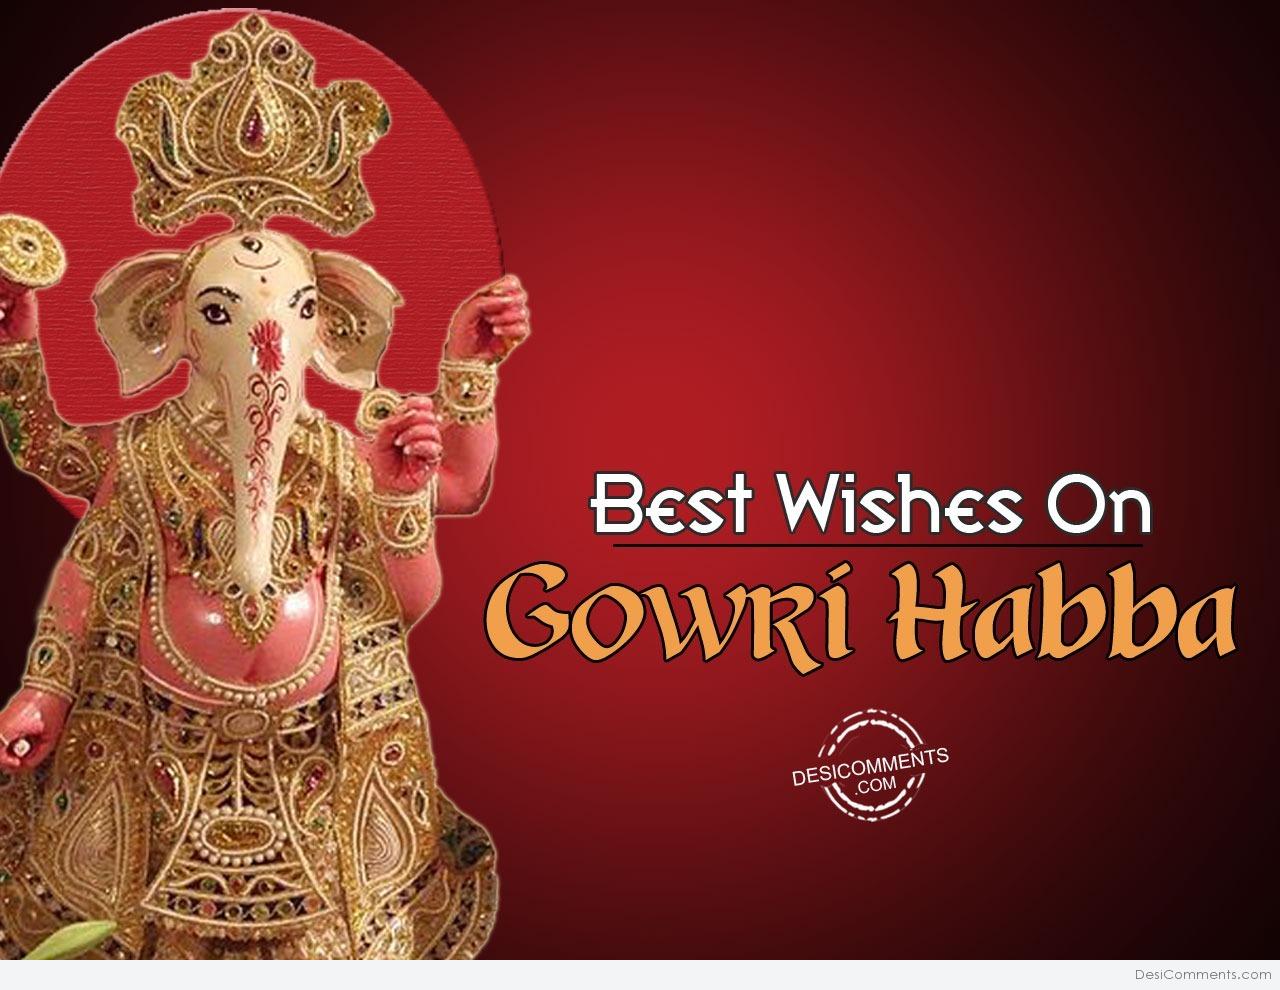 Wishing happy Gowri Habba - DesiComments.com